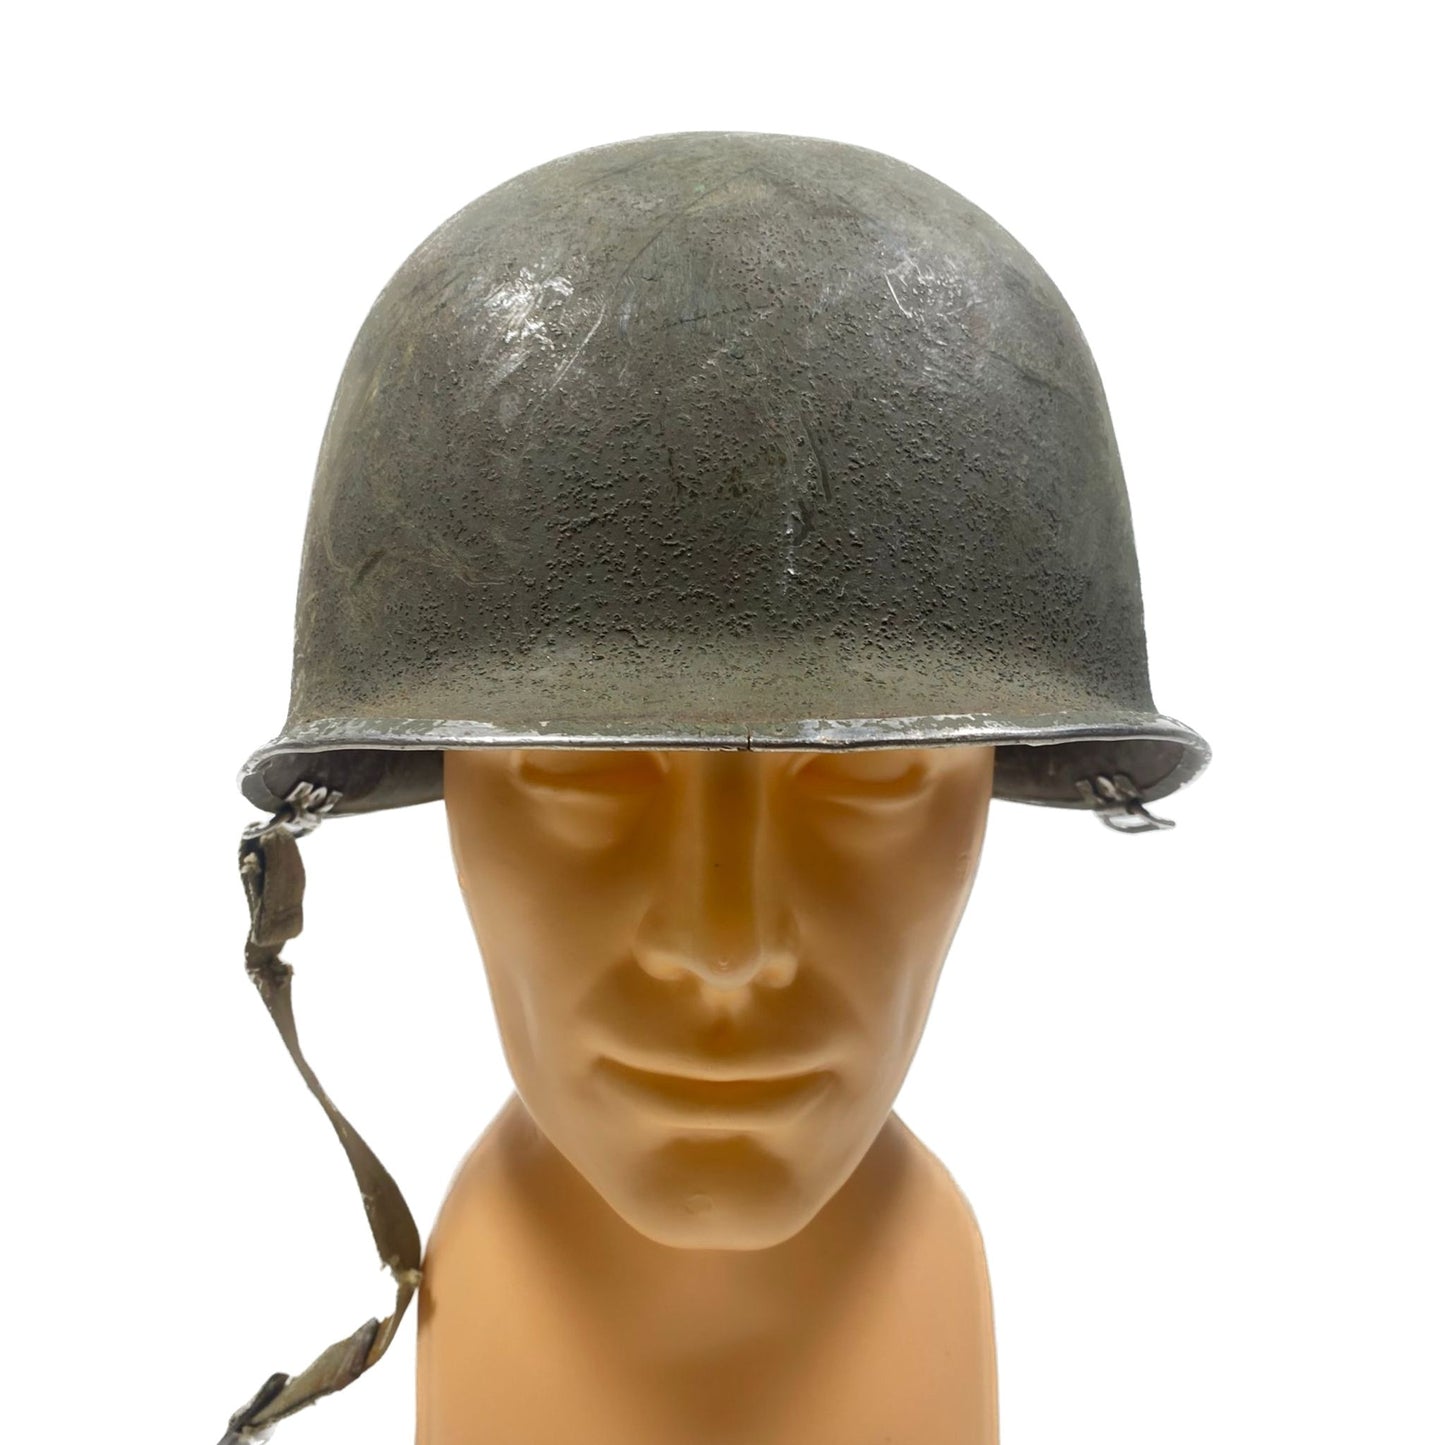 WW2 M1 Helmet shell, McCord, front seam, 67A - 1941